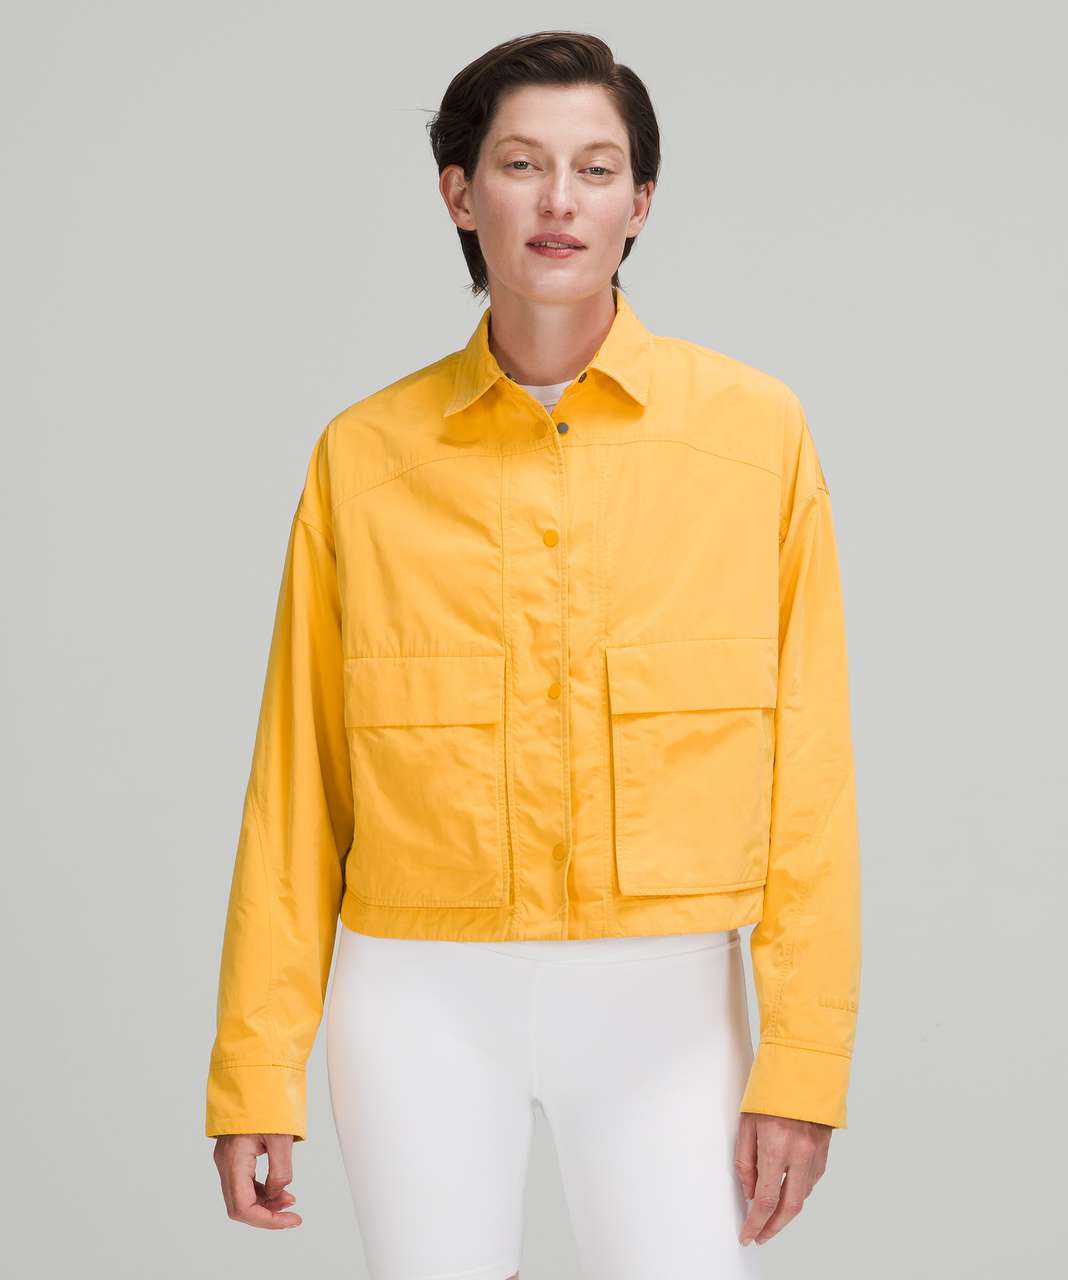 Lululemon Simply Effortless Jacket - Wheat Yellow